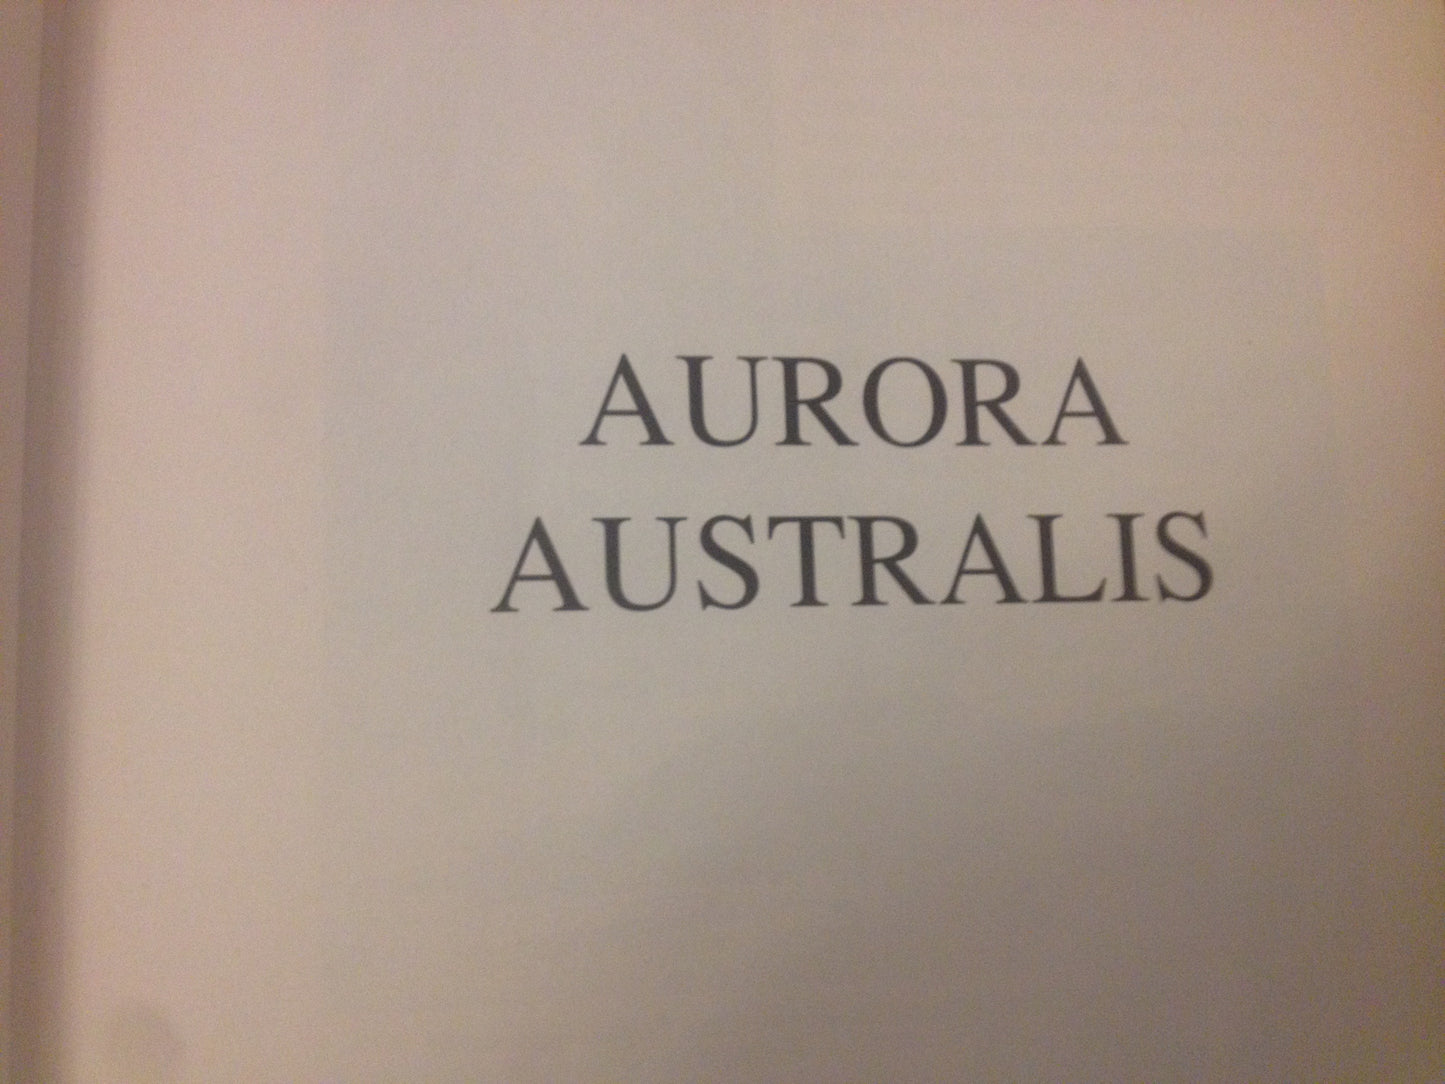 AURORA AUSTRALIS - ERNEST H. SHACKLETON